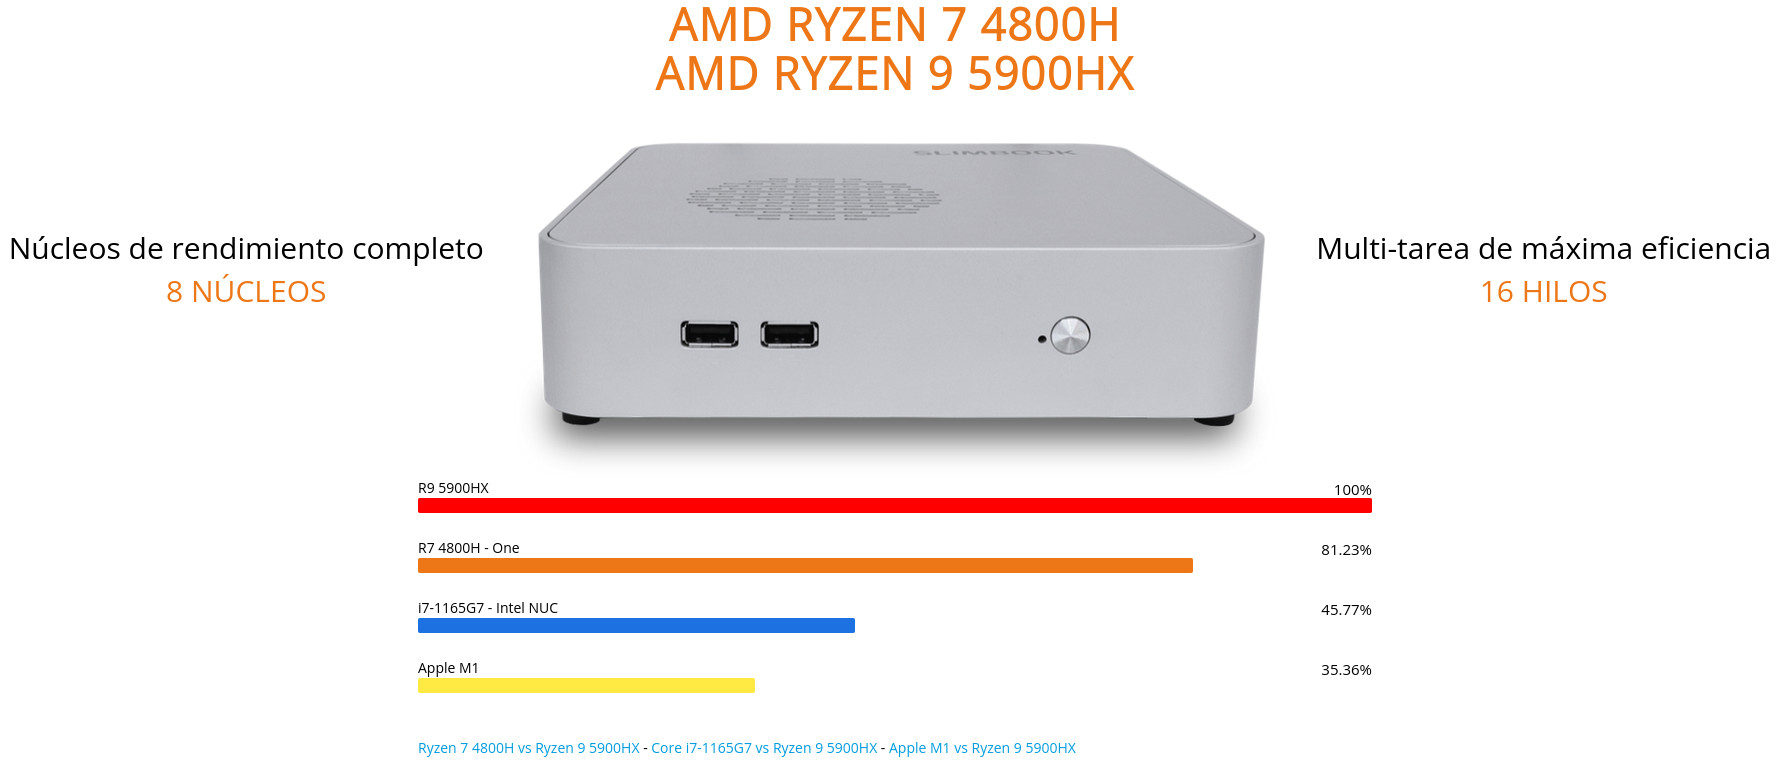 AMD Ryzen 9 5900HX frente al Ryzen 7 4800H en el Slimbook One